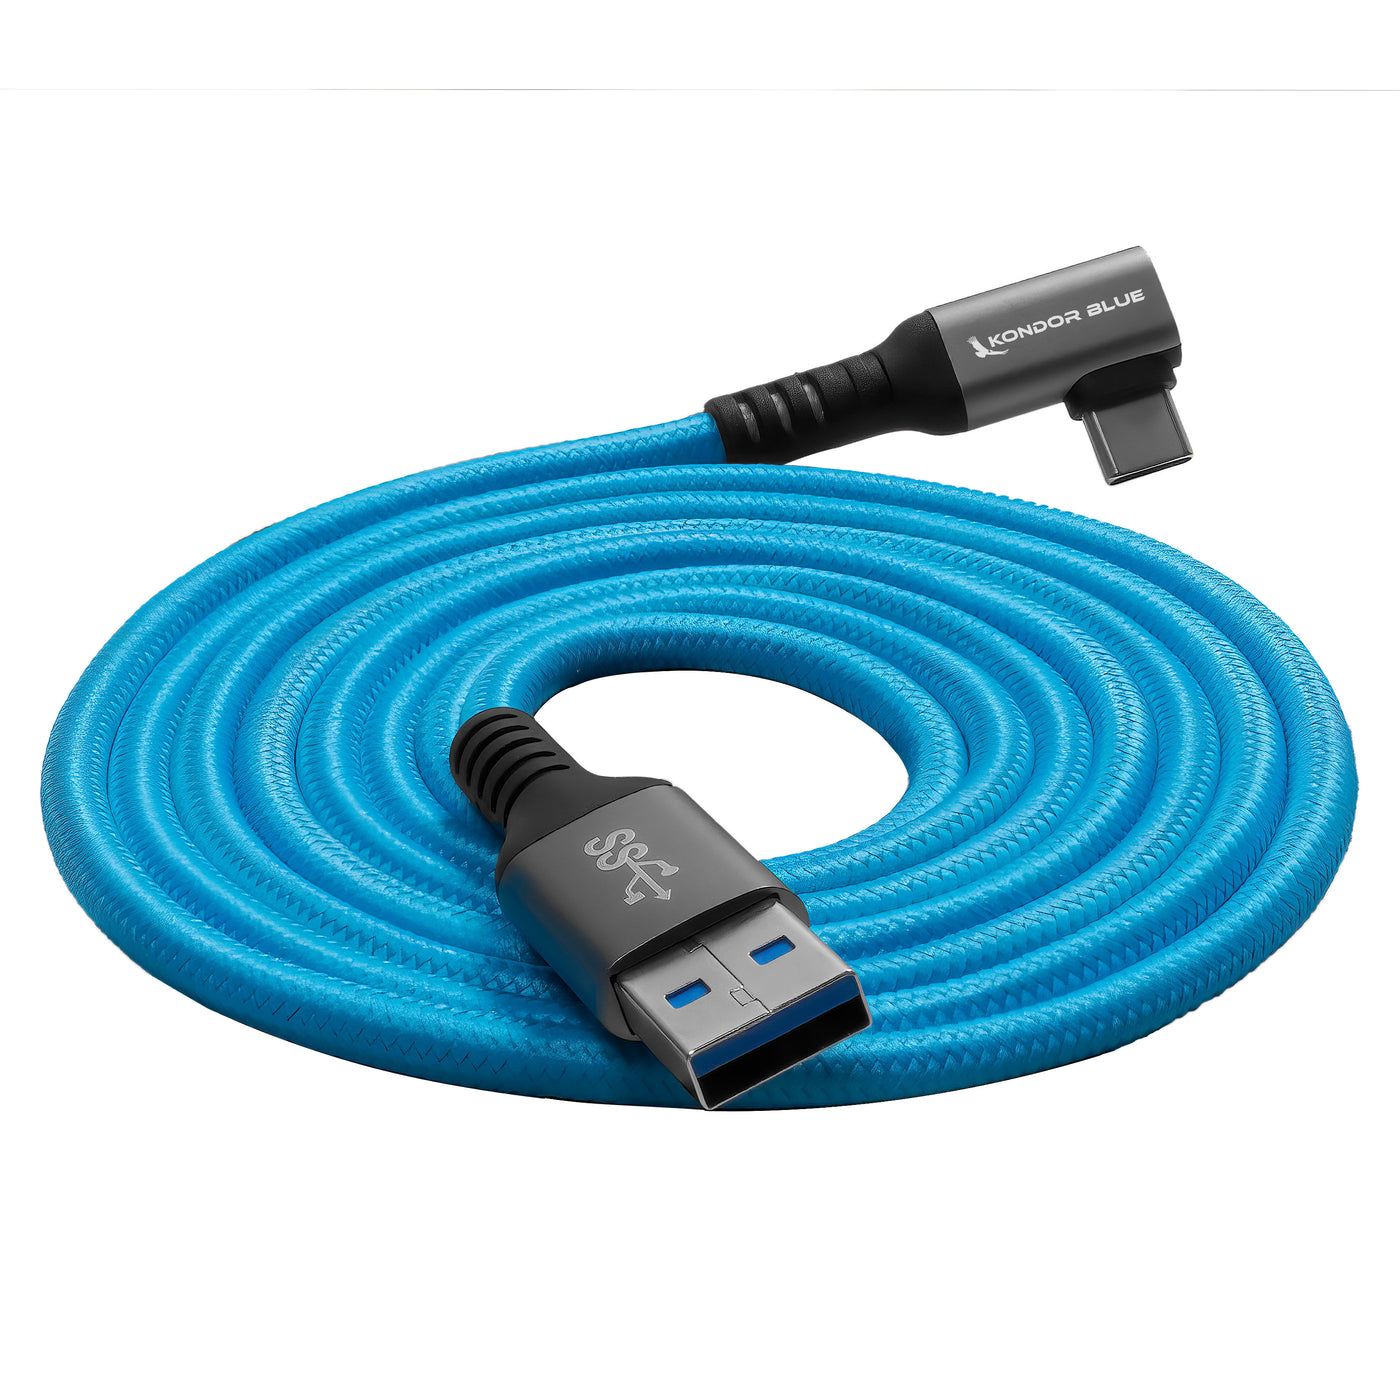 Kondor Blue Right-Angle USB-C 3.1 Gen 2 Cable KB_USBC_RA12_BK